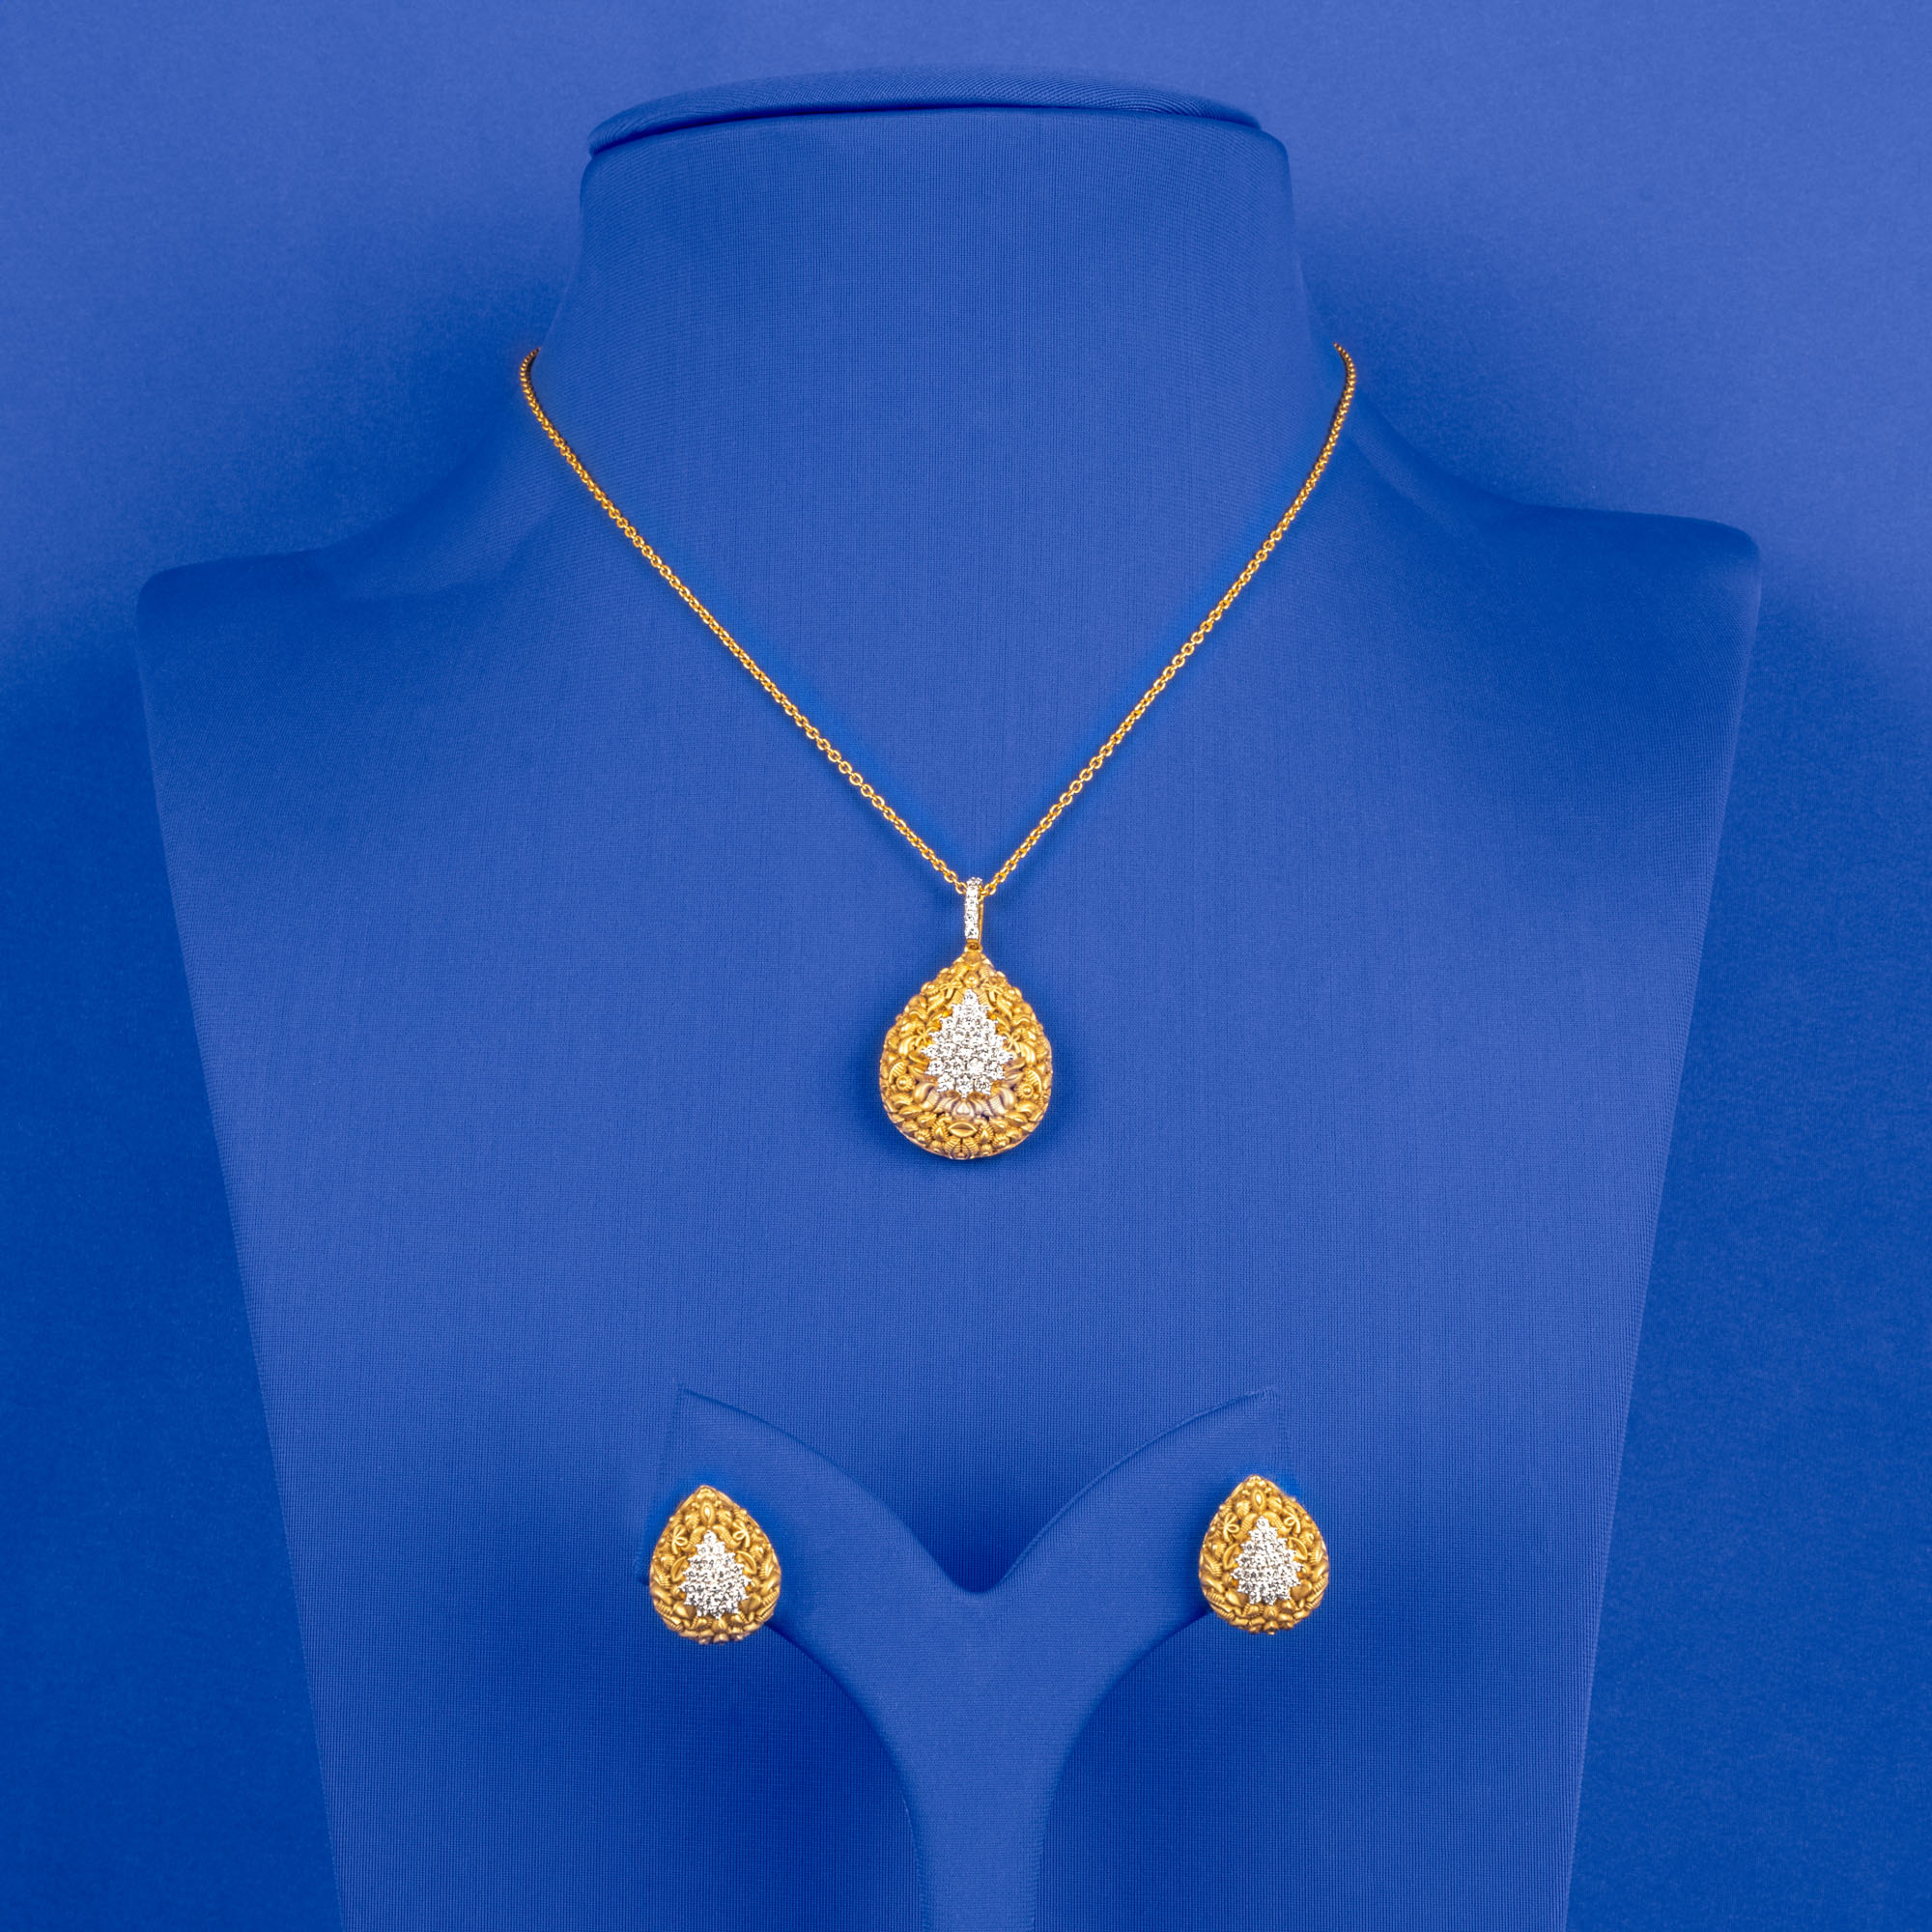 Celestial Splendor: Handcrafted 18K Yellow Gold Diamond Pendant & Earrings Set (chain not included)